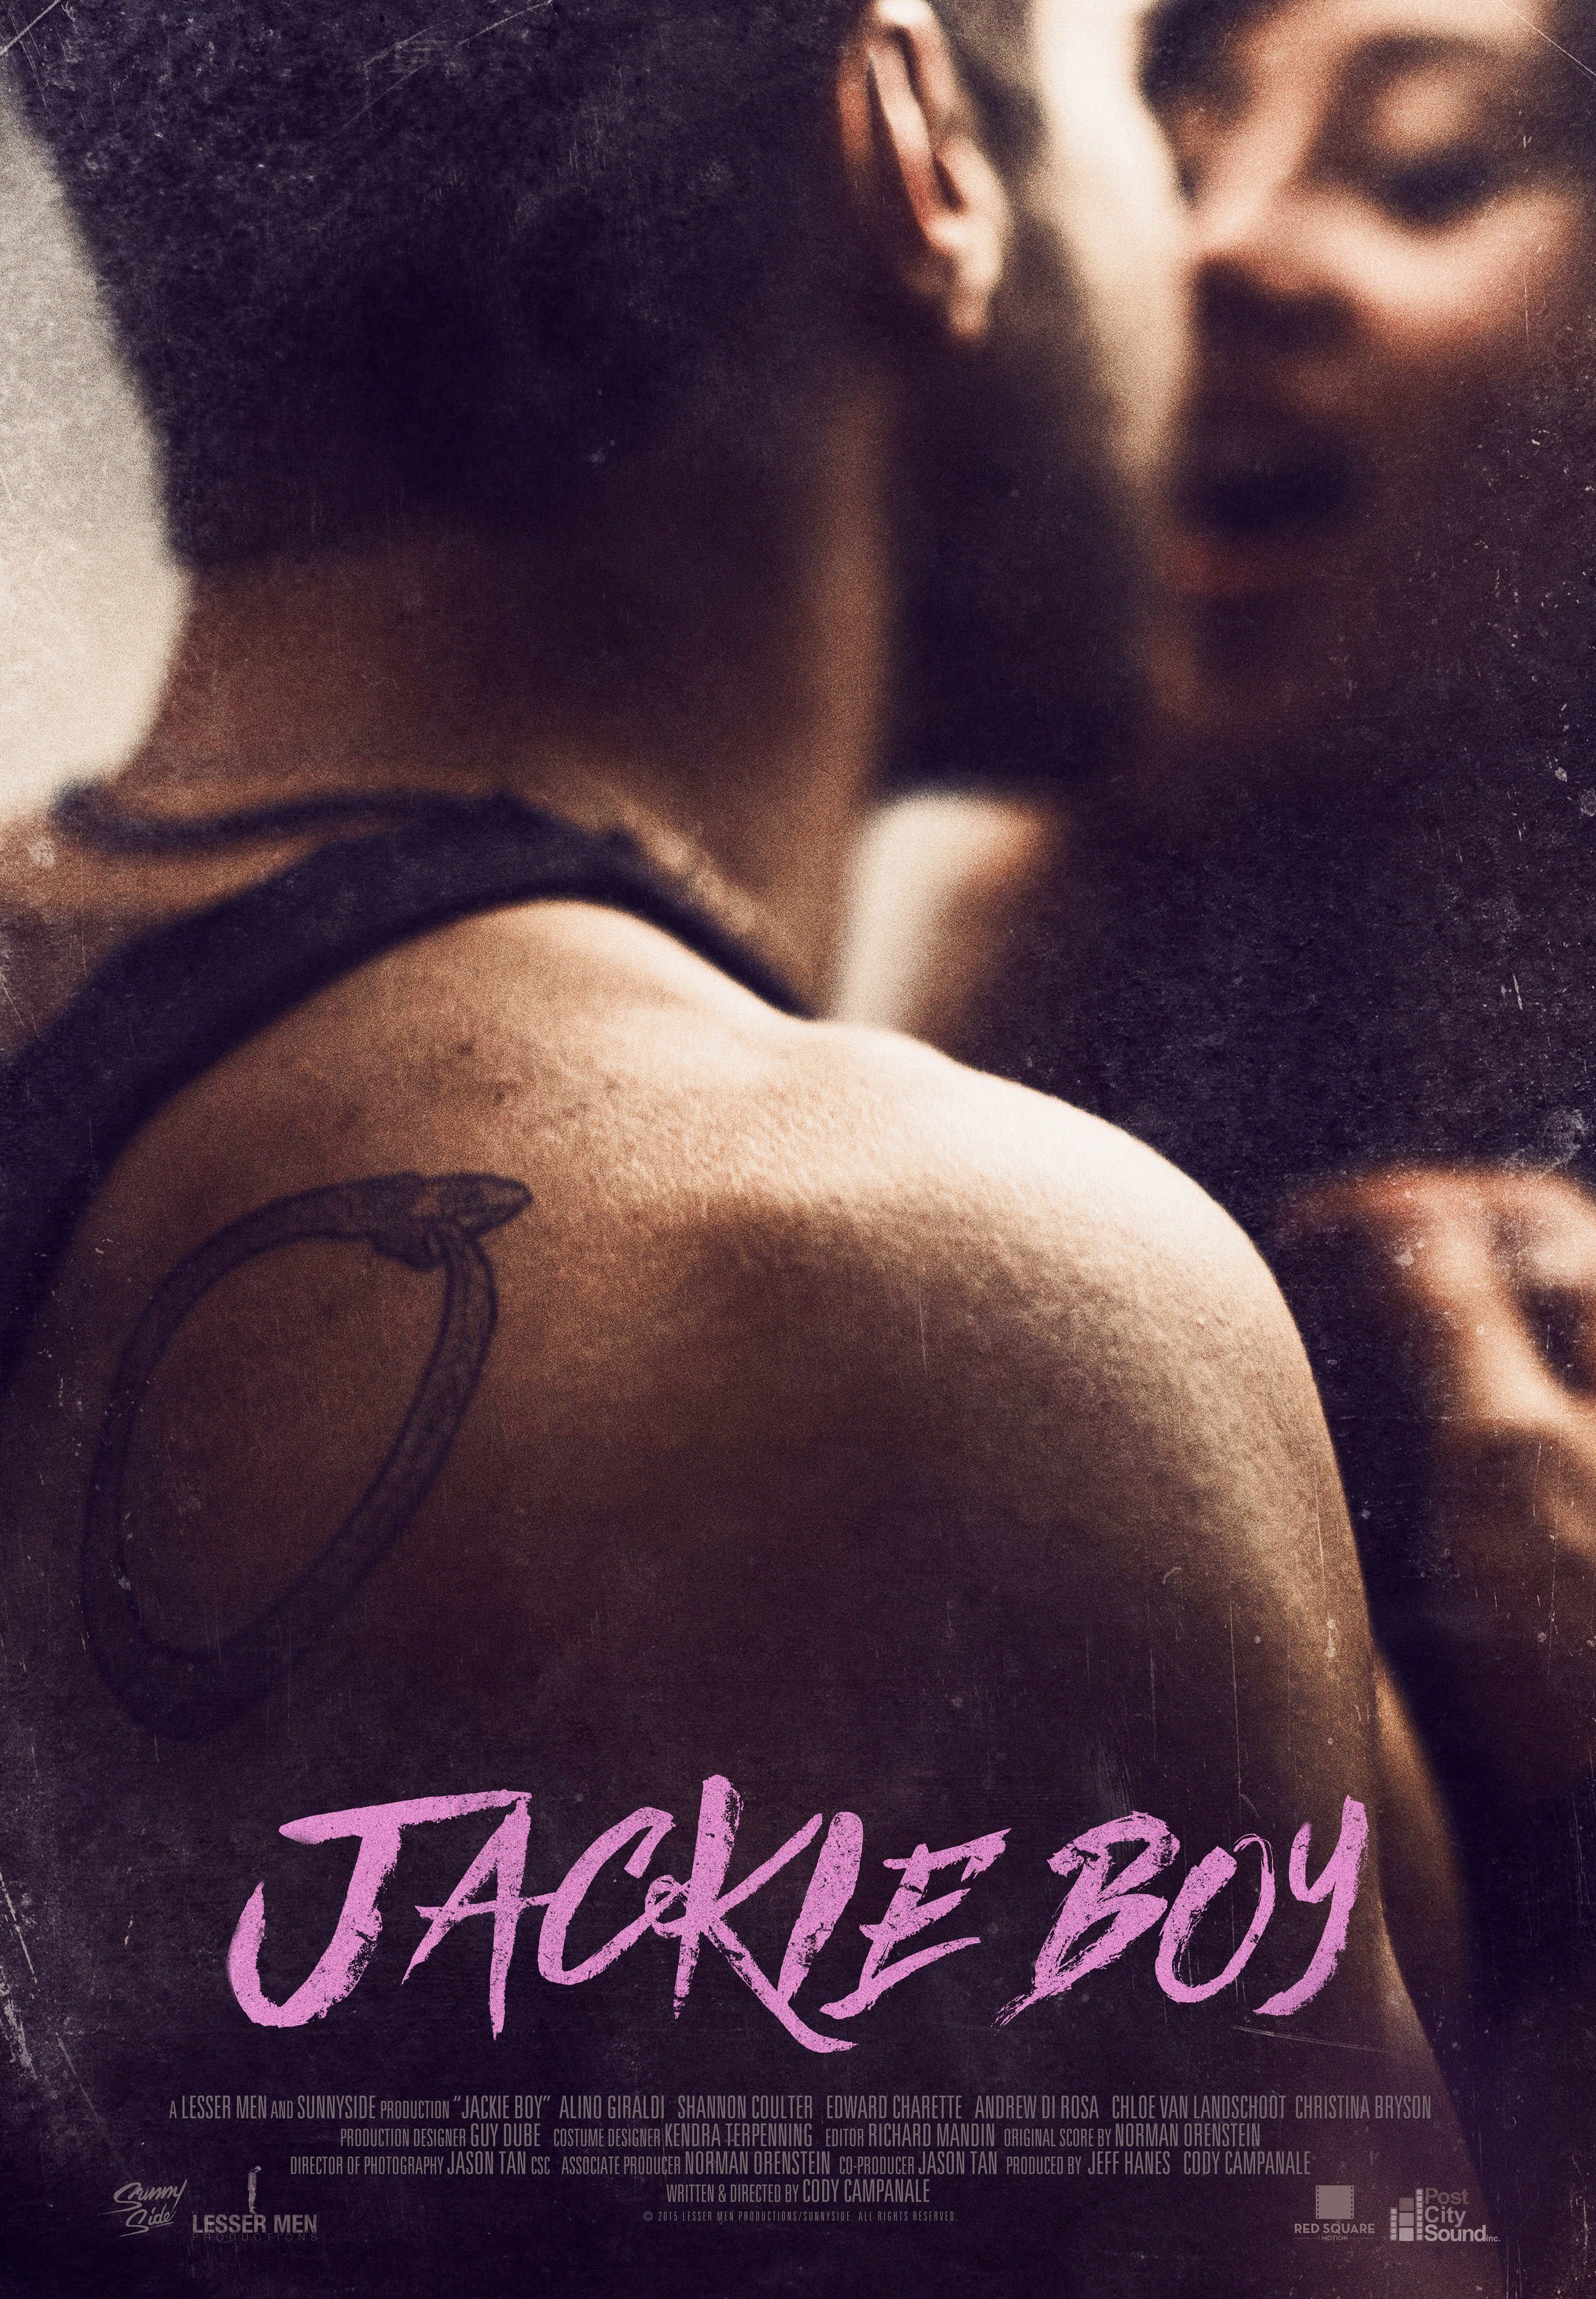 Nonton film Jackie Boy layarkaca21 indoxx1 ganool online streaming terbaru